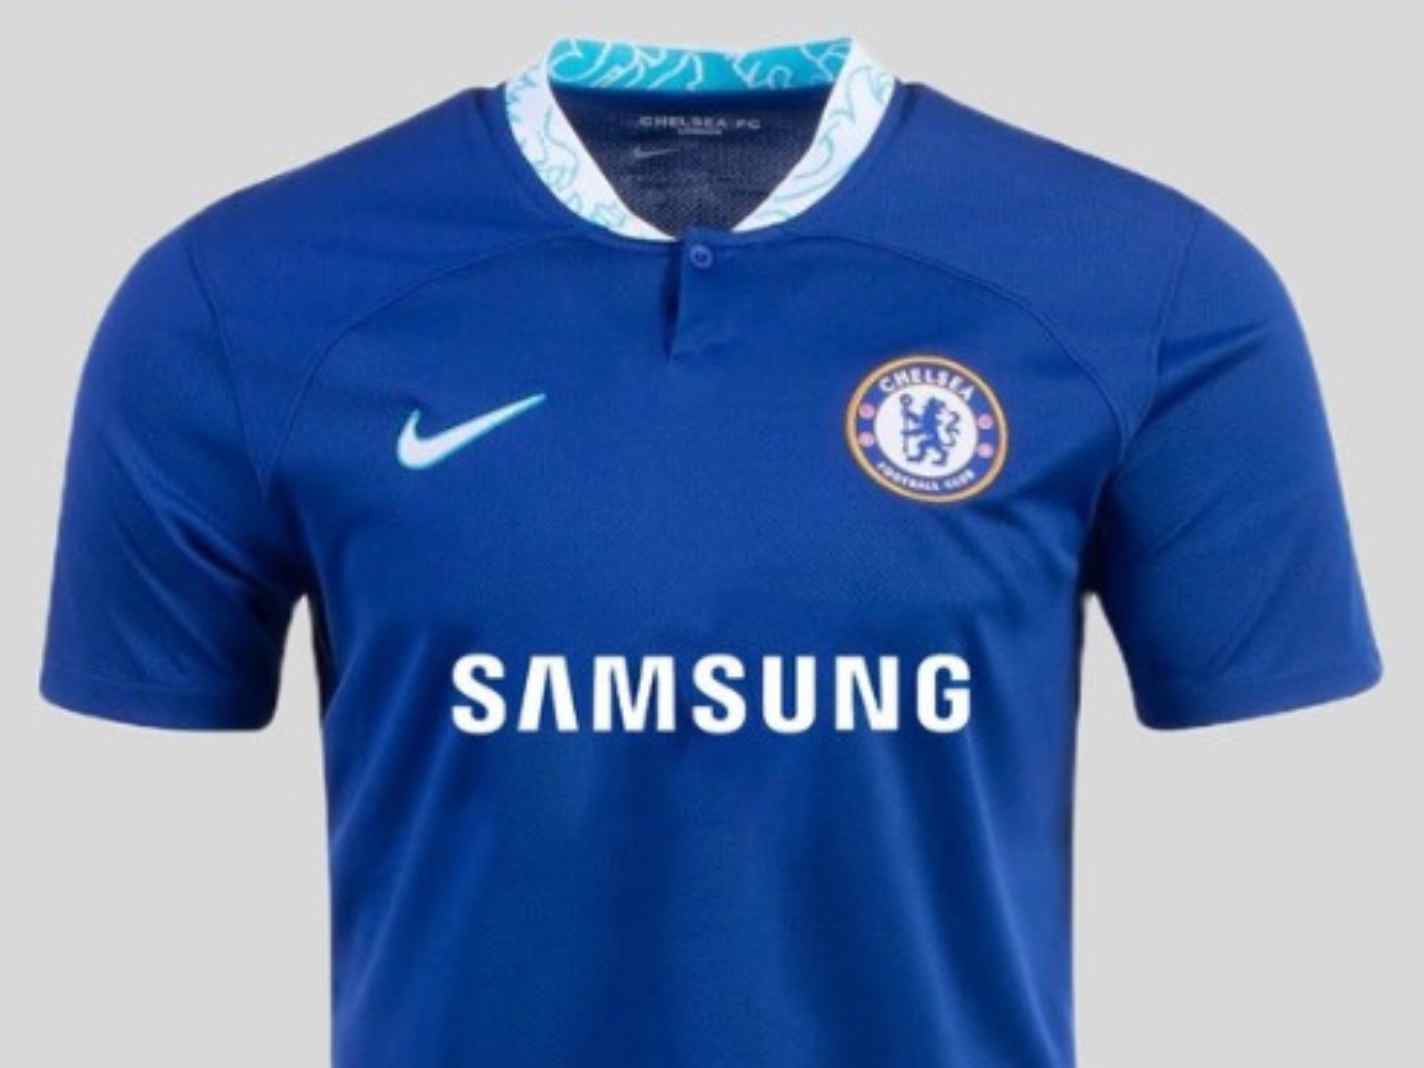 Could Samsung return as Chelsea kit sponsor in 2023?